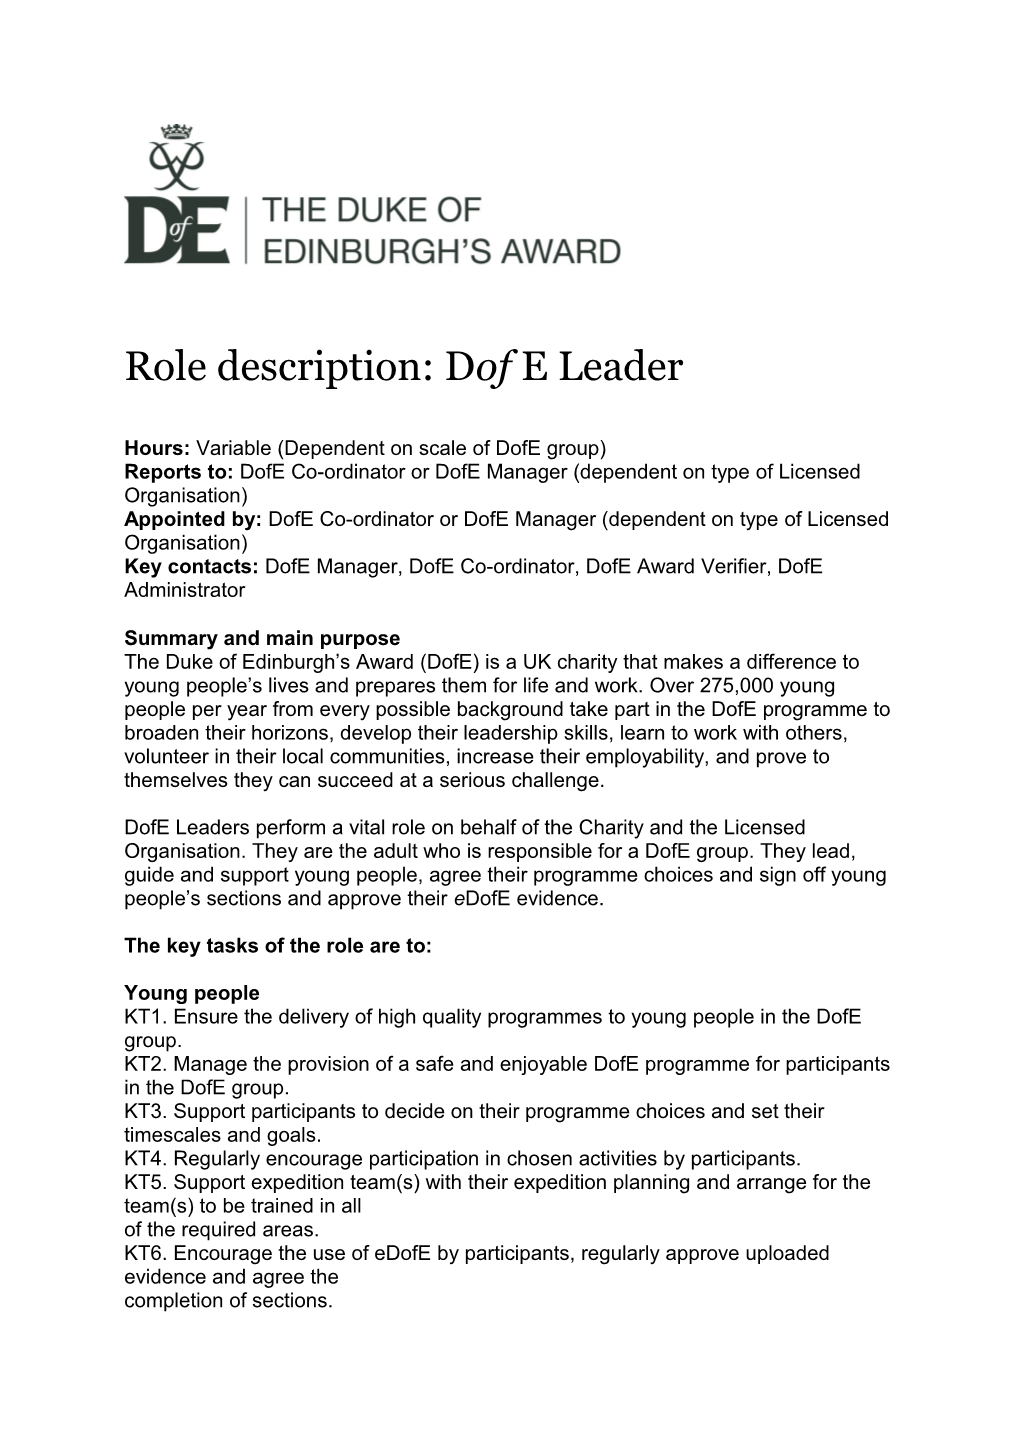 Role Description: Dofe Leader